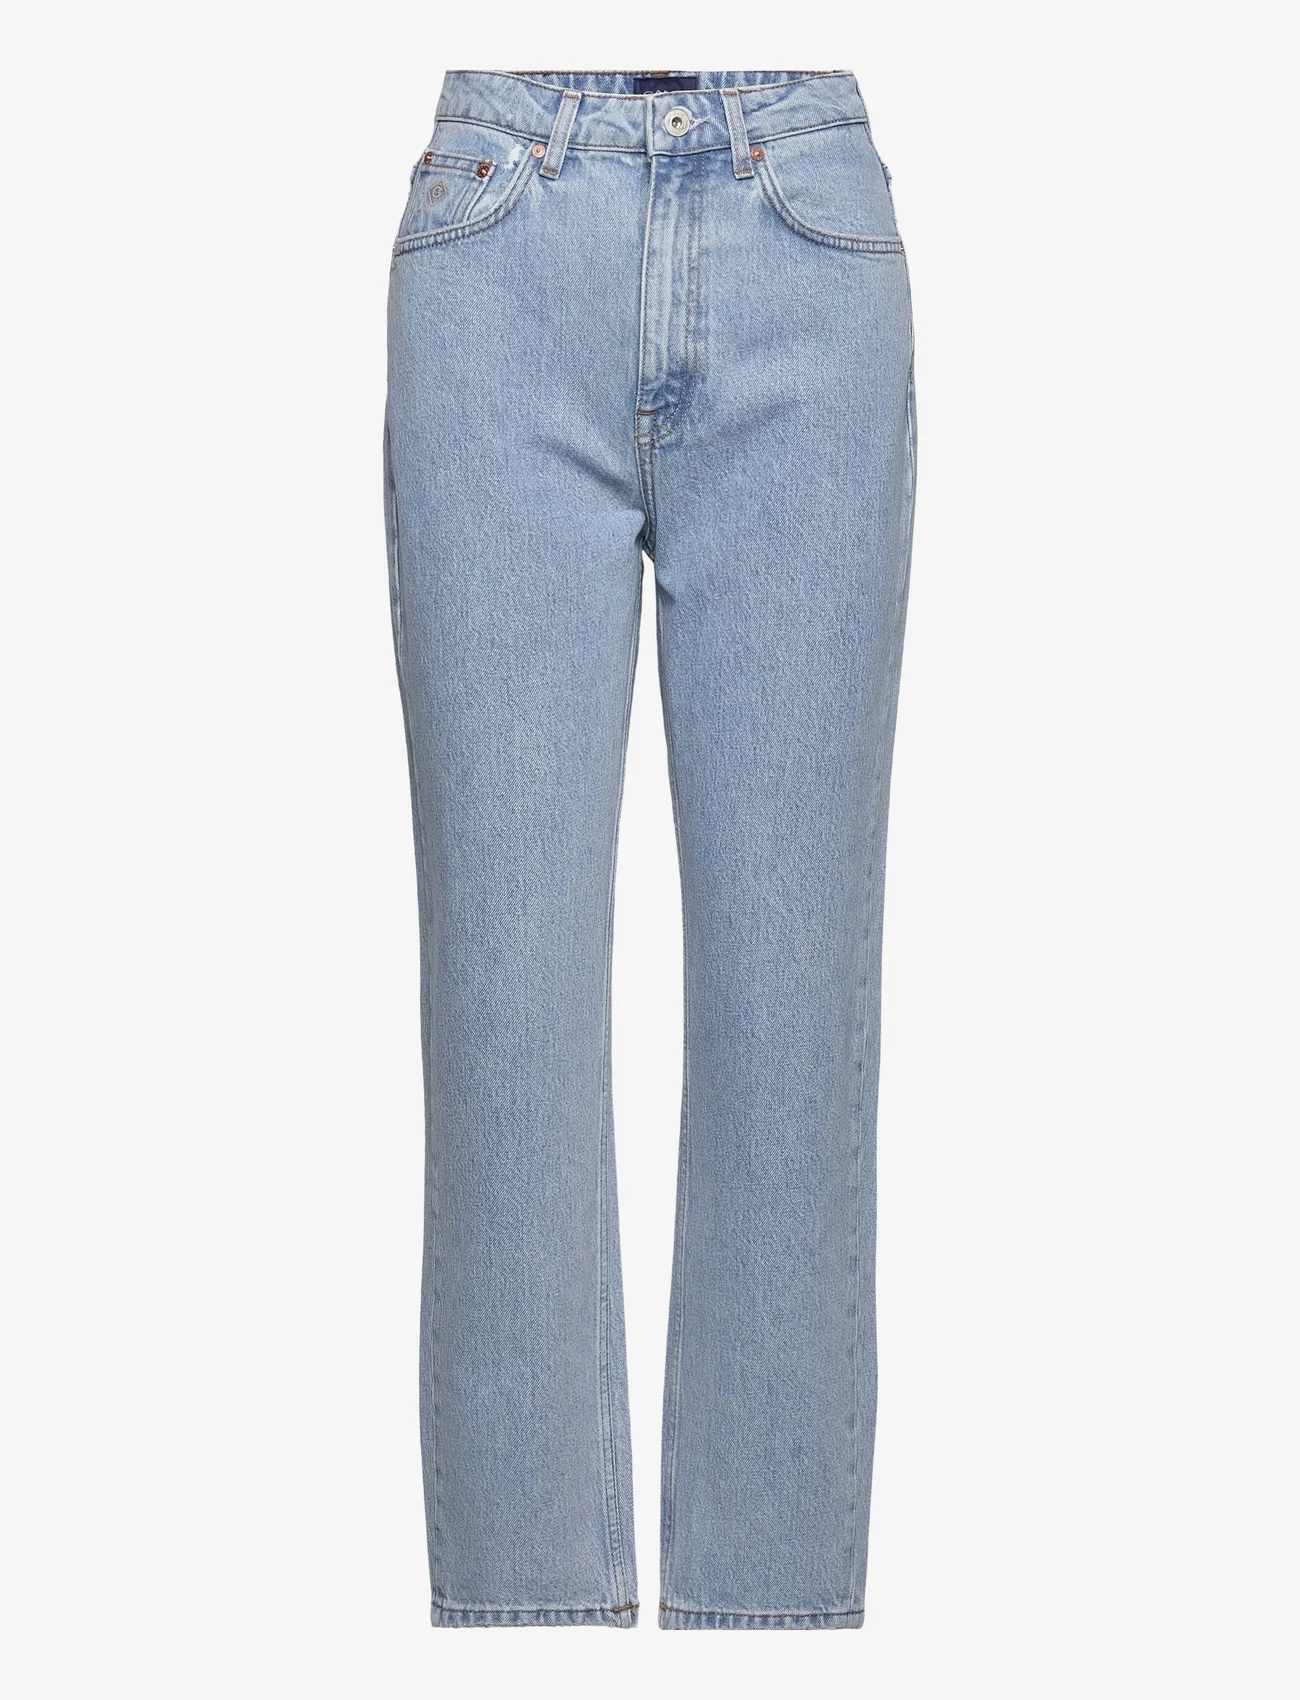 GANT - D1. STRAIGHT HW CROPPED JEANS - straight jeans - light blue vintage - 0